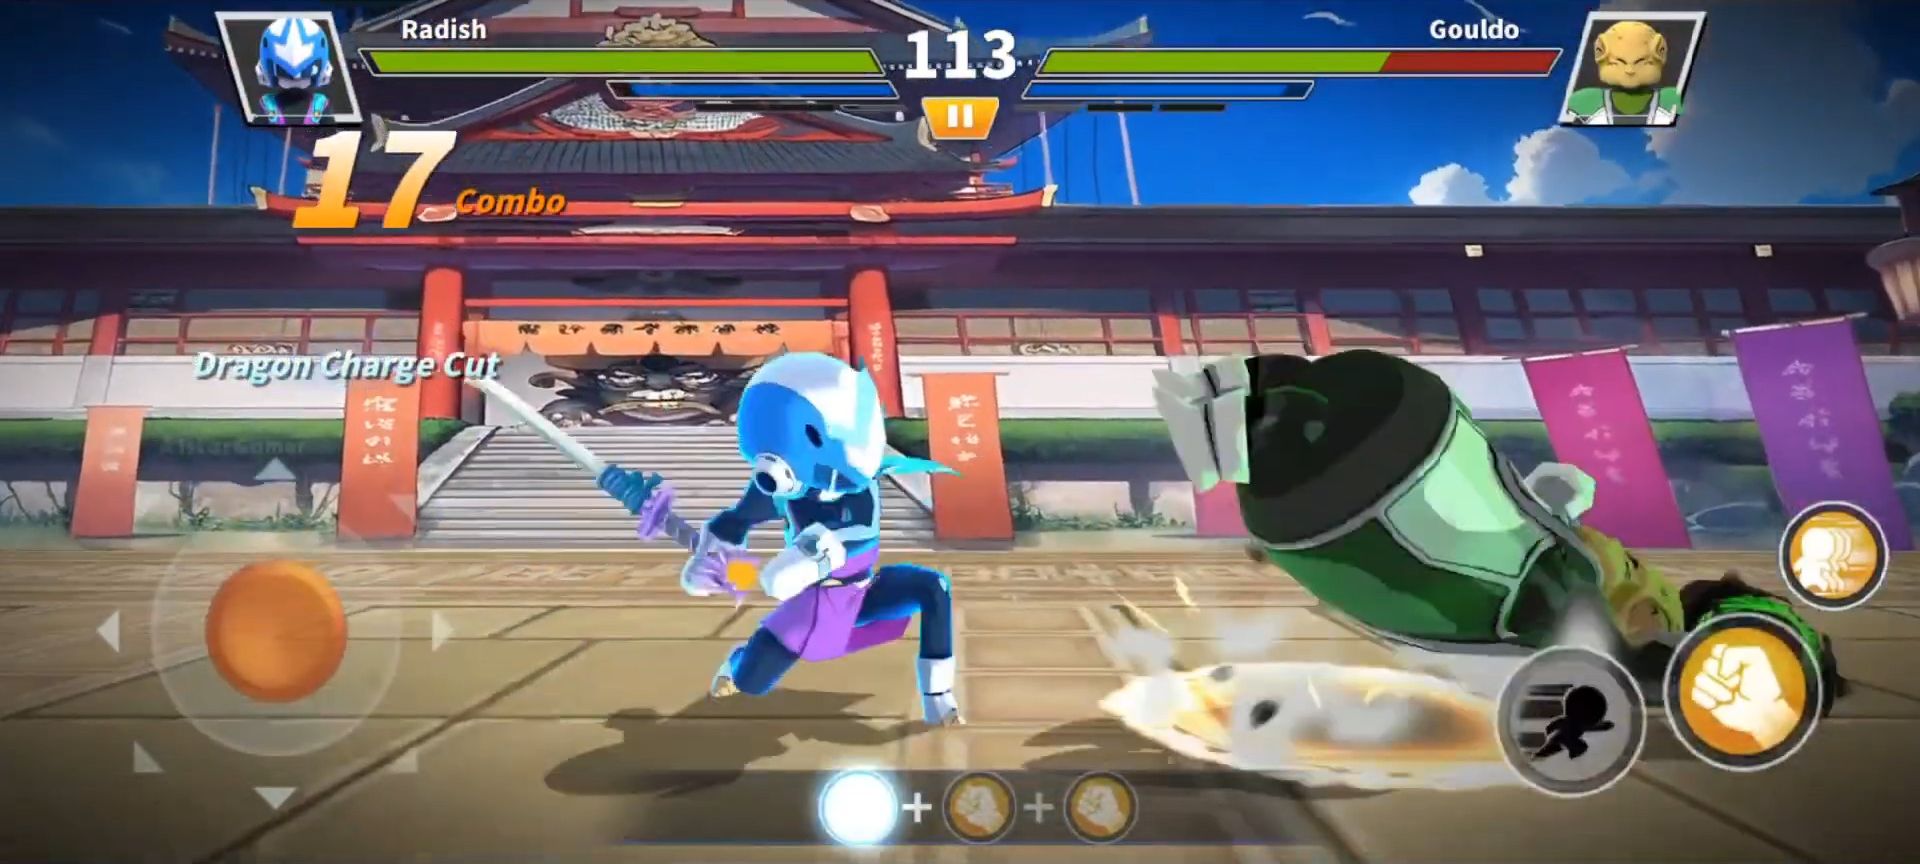 Dragon Champion Z - Android game screenshots.